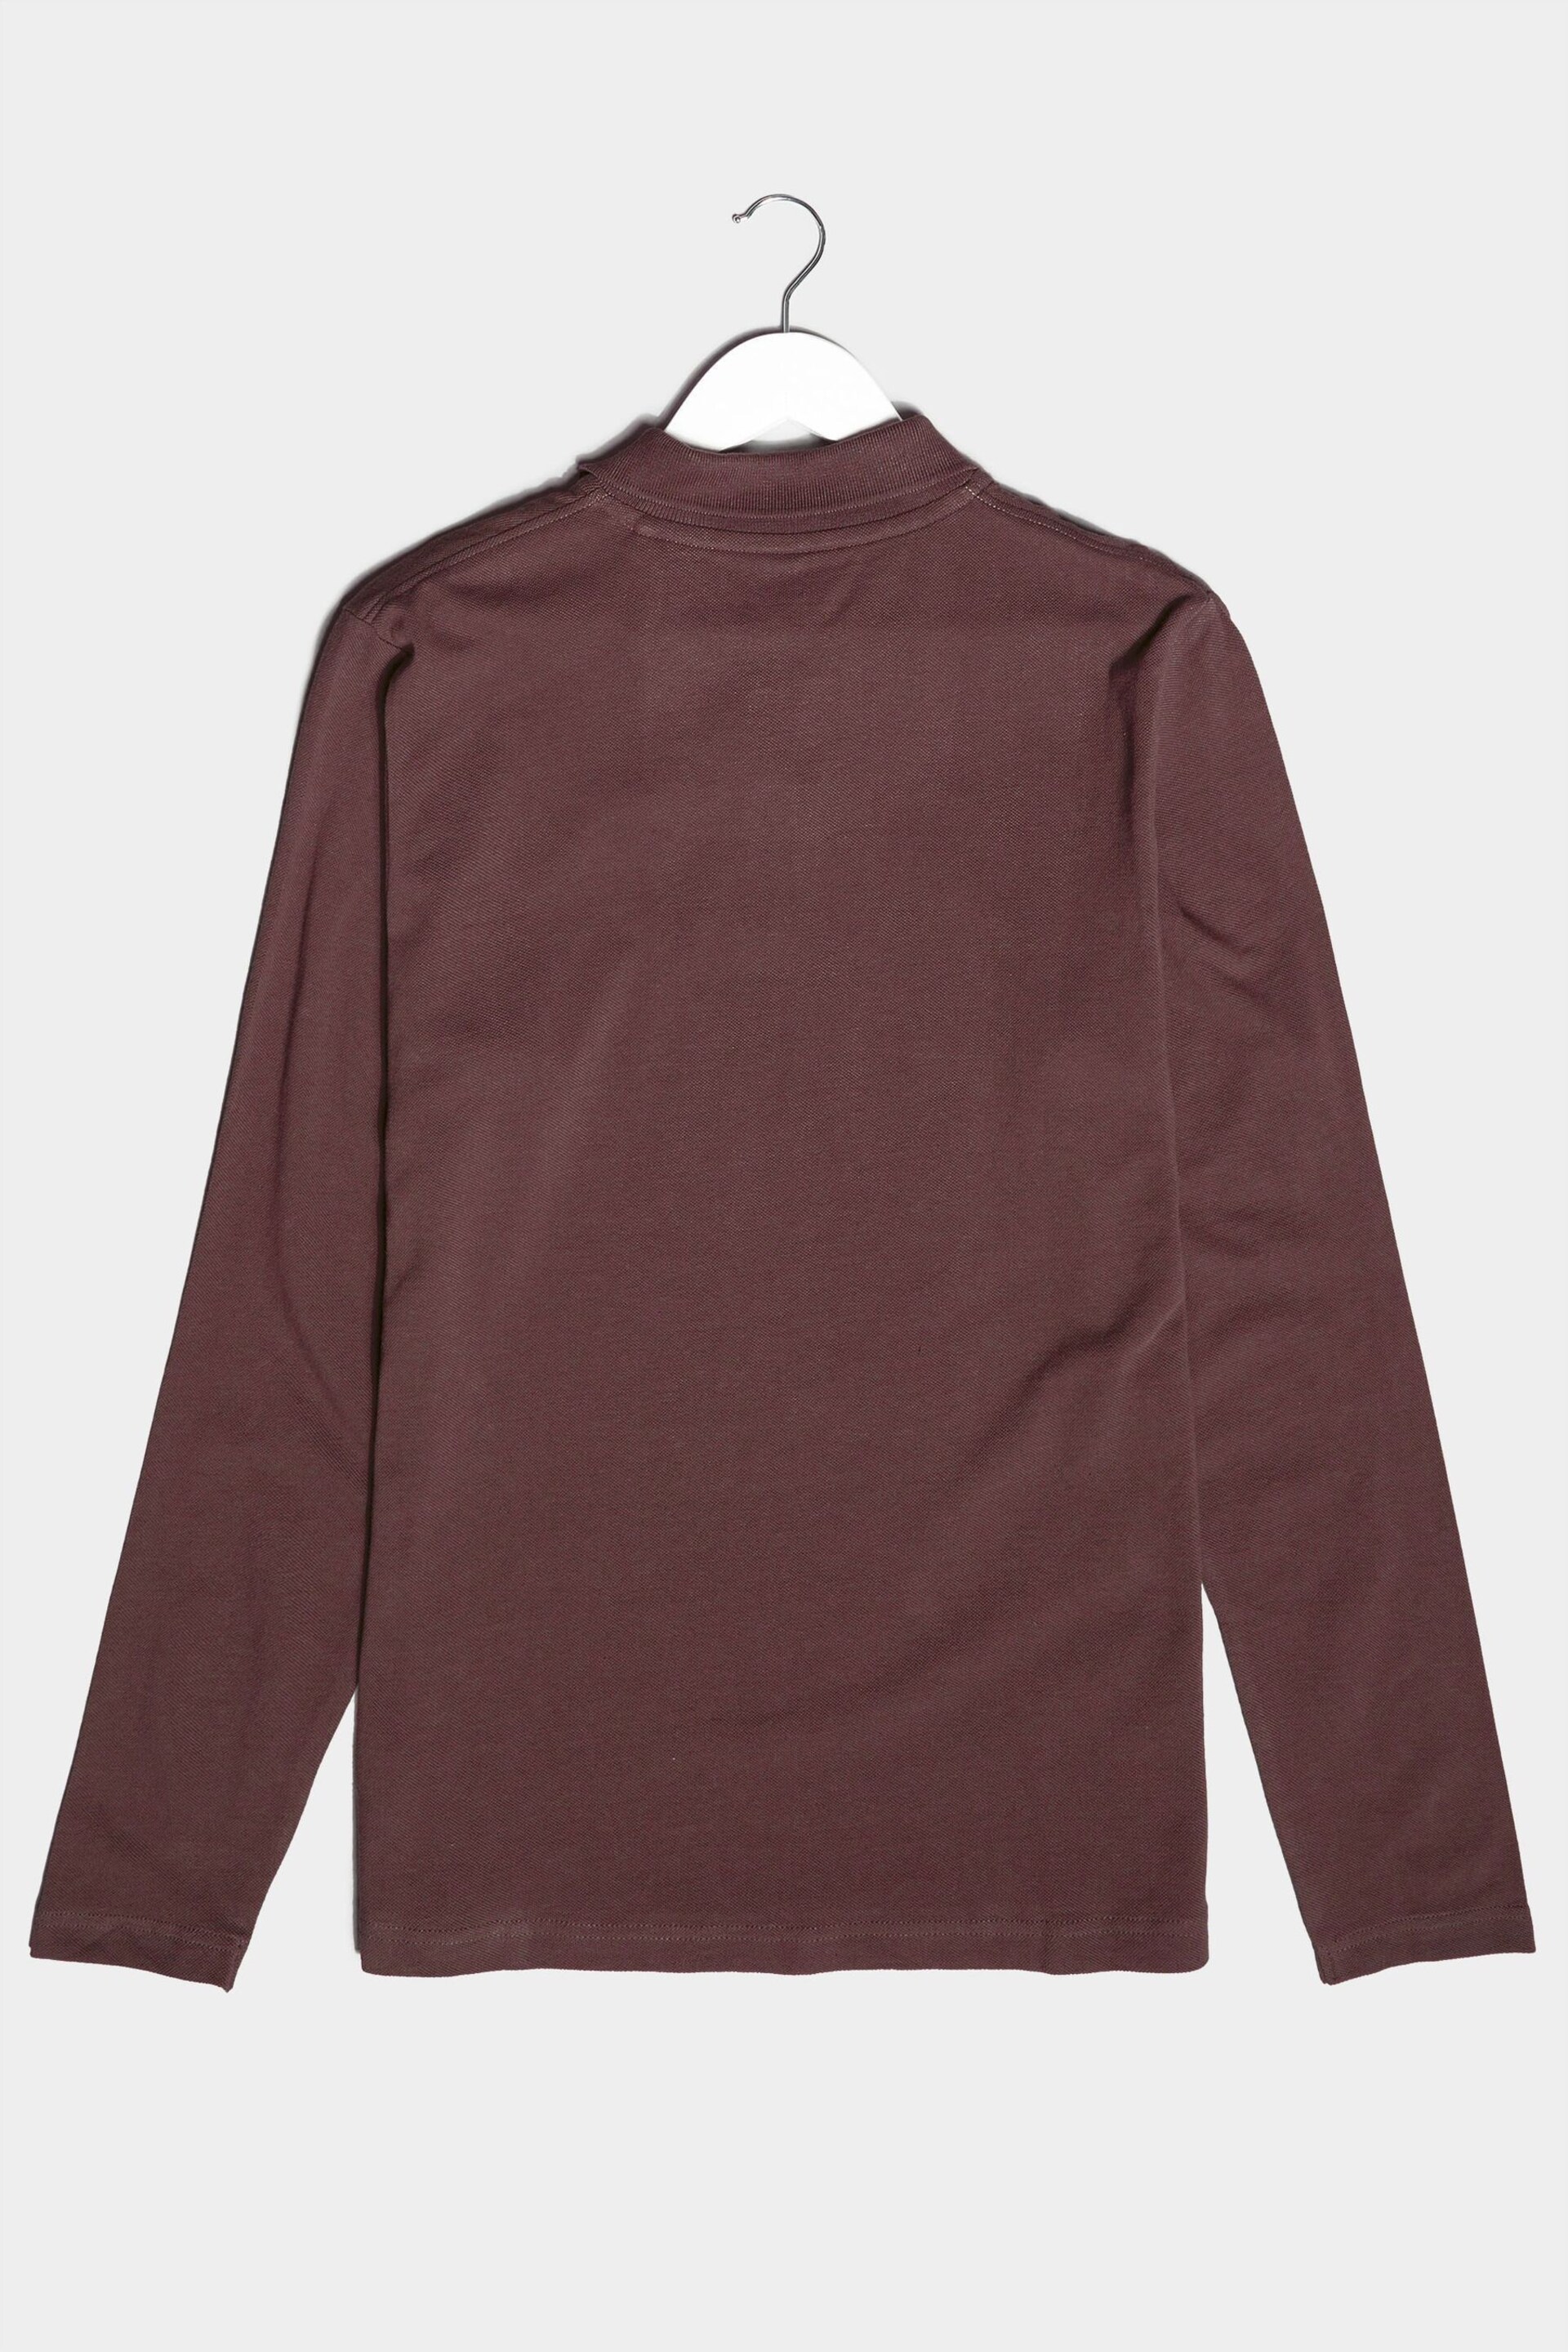 BadRhino Big & Tall Red Essential Long Sleeve Polo Shirt - Image 3 of 3